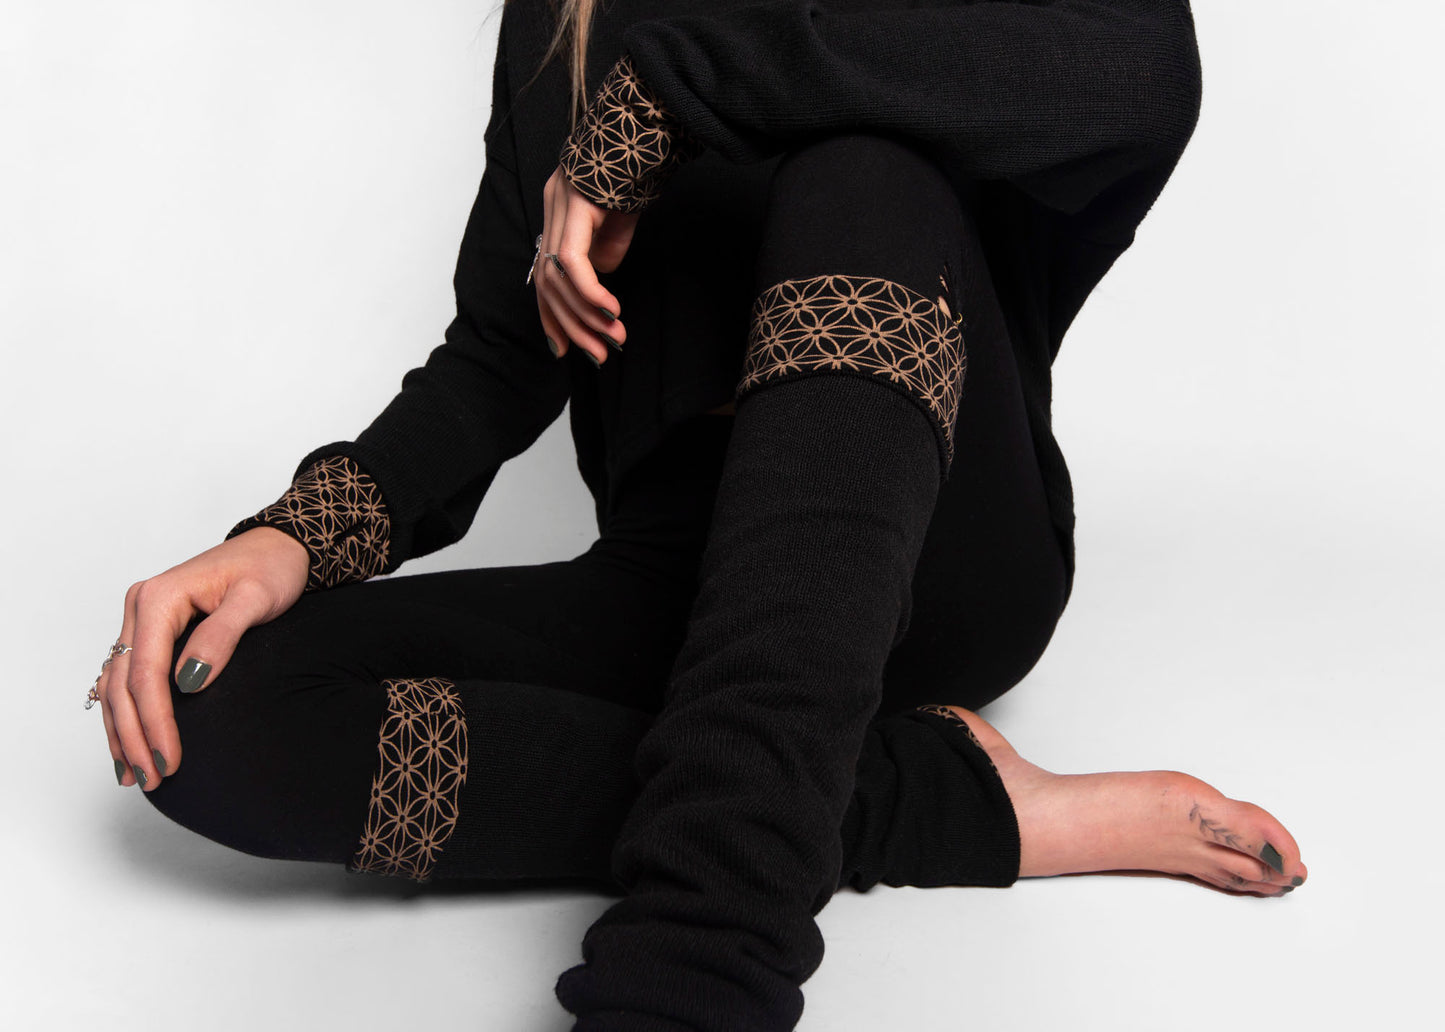 Reversible leg warmers in black, cuffs, yoga cuffs